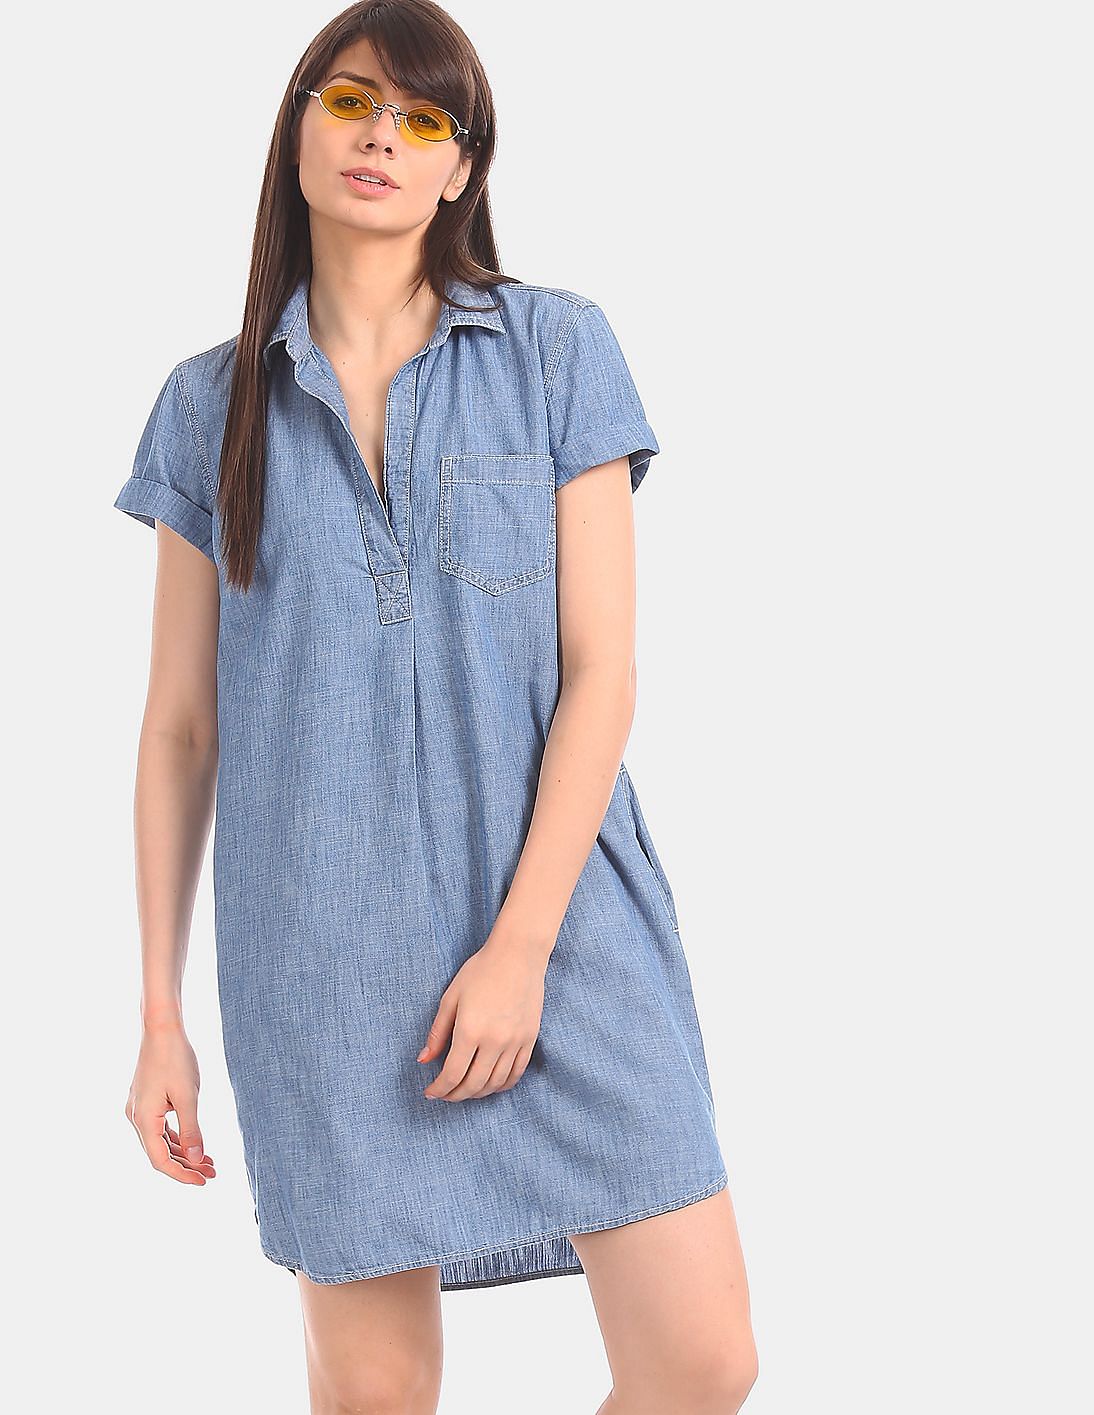 Buy > chambray dress short sleeve > in stock